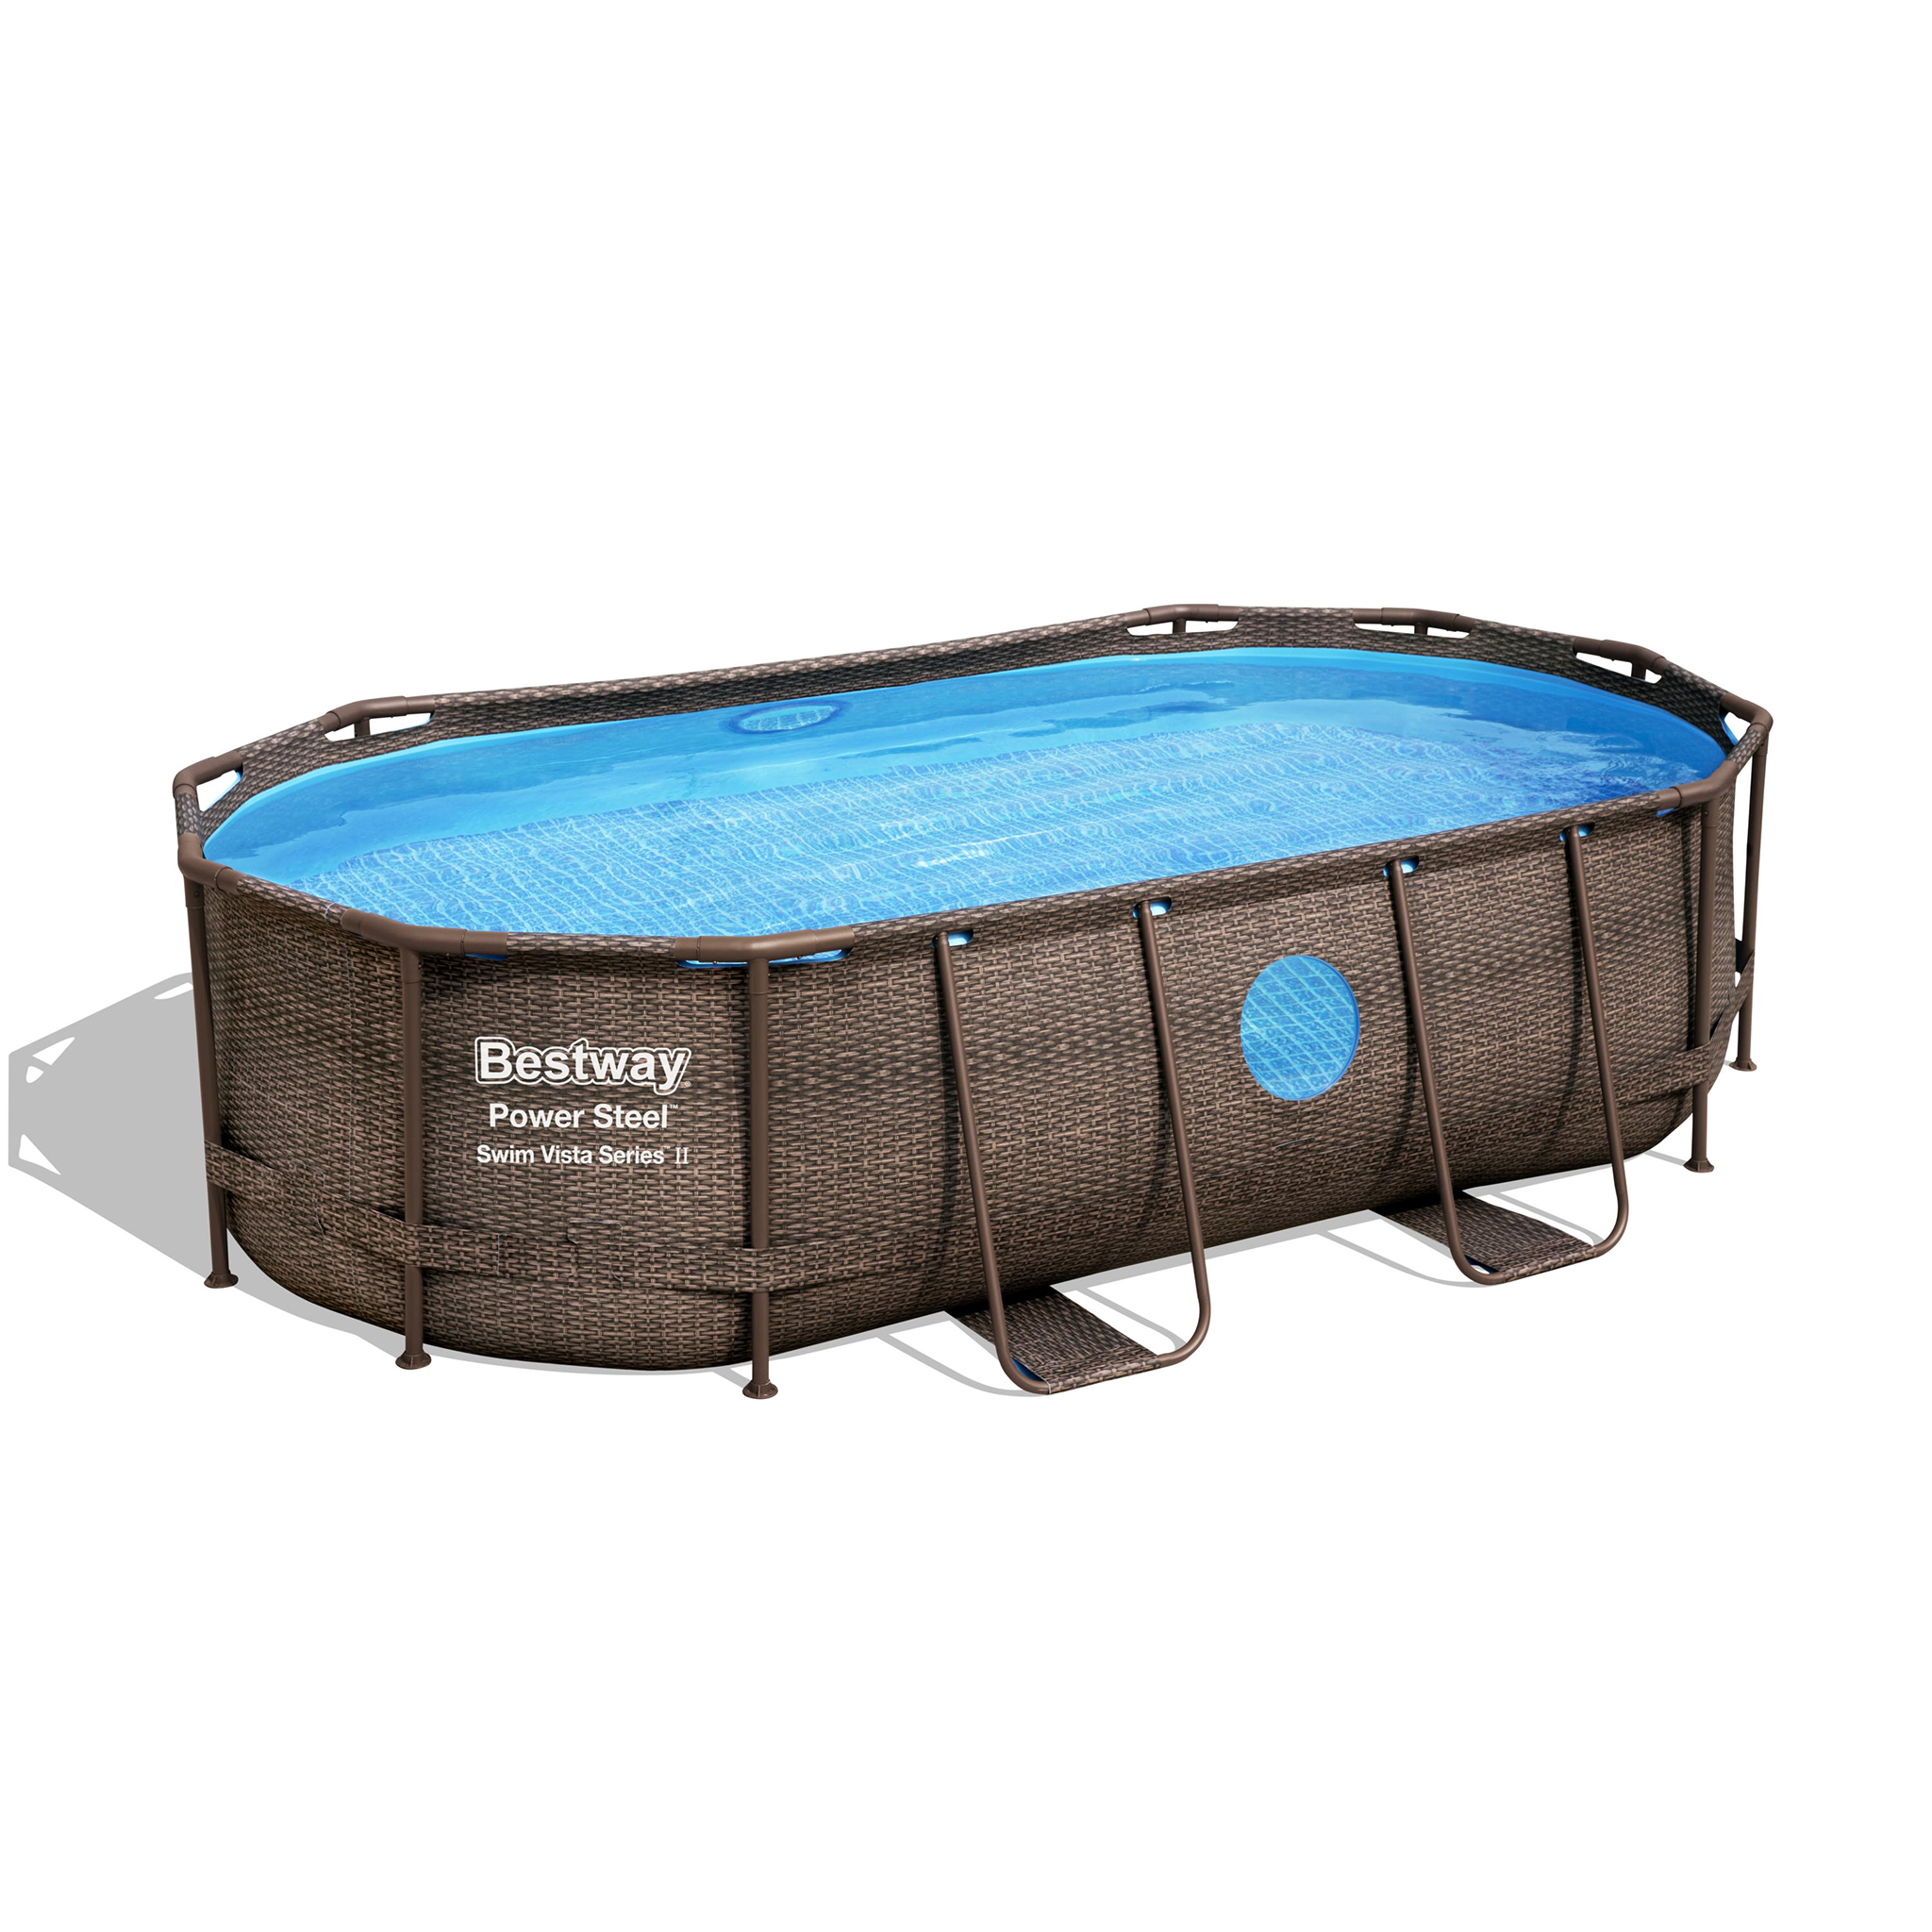 Bestway pool ovan mark 4,27x2,5m | Power Steel Swim Vista II (56714)